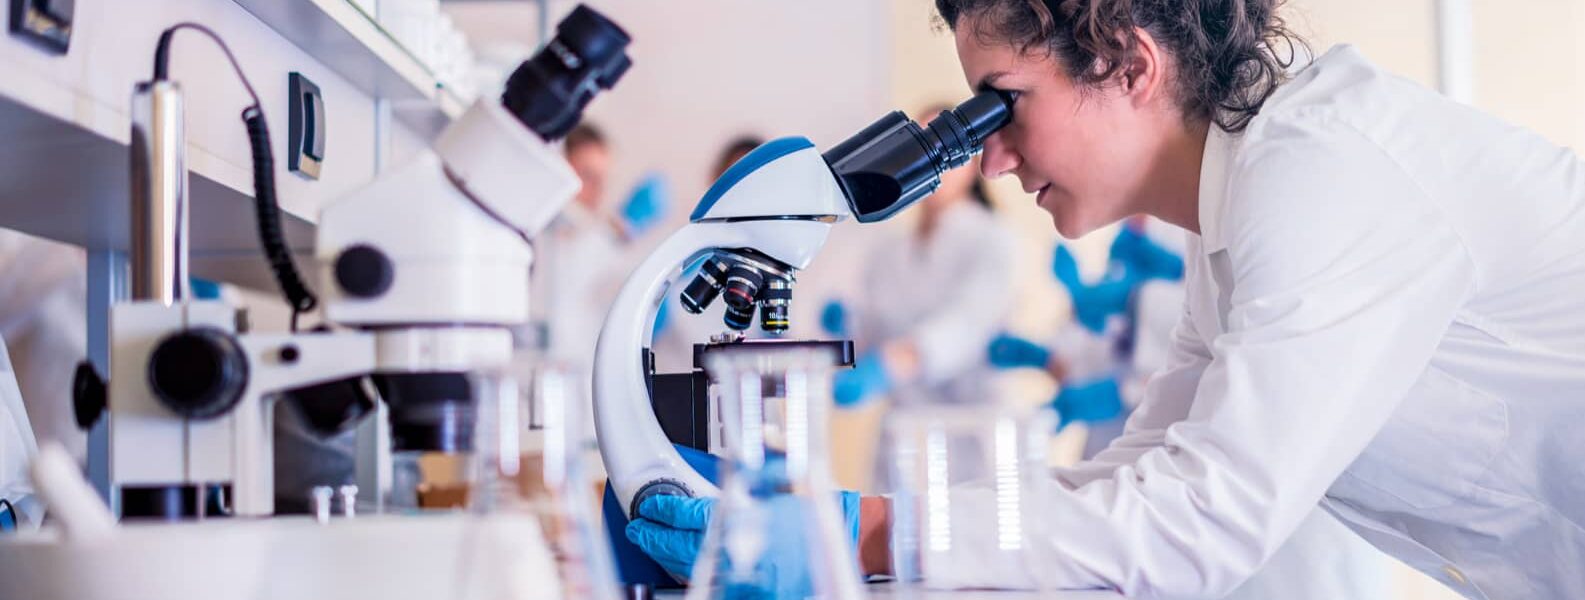 women scientist working on microscope